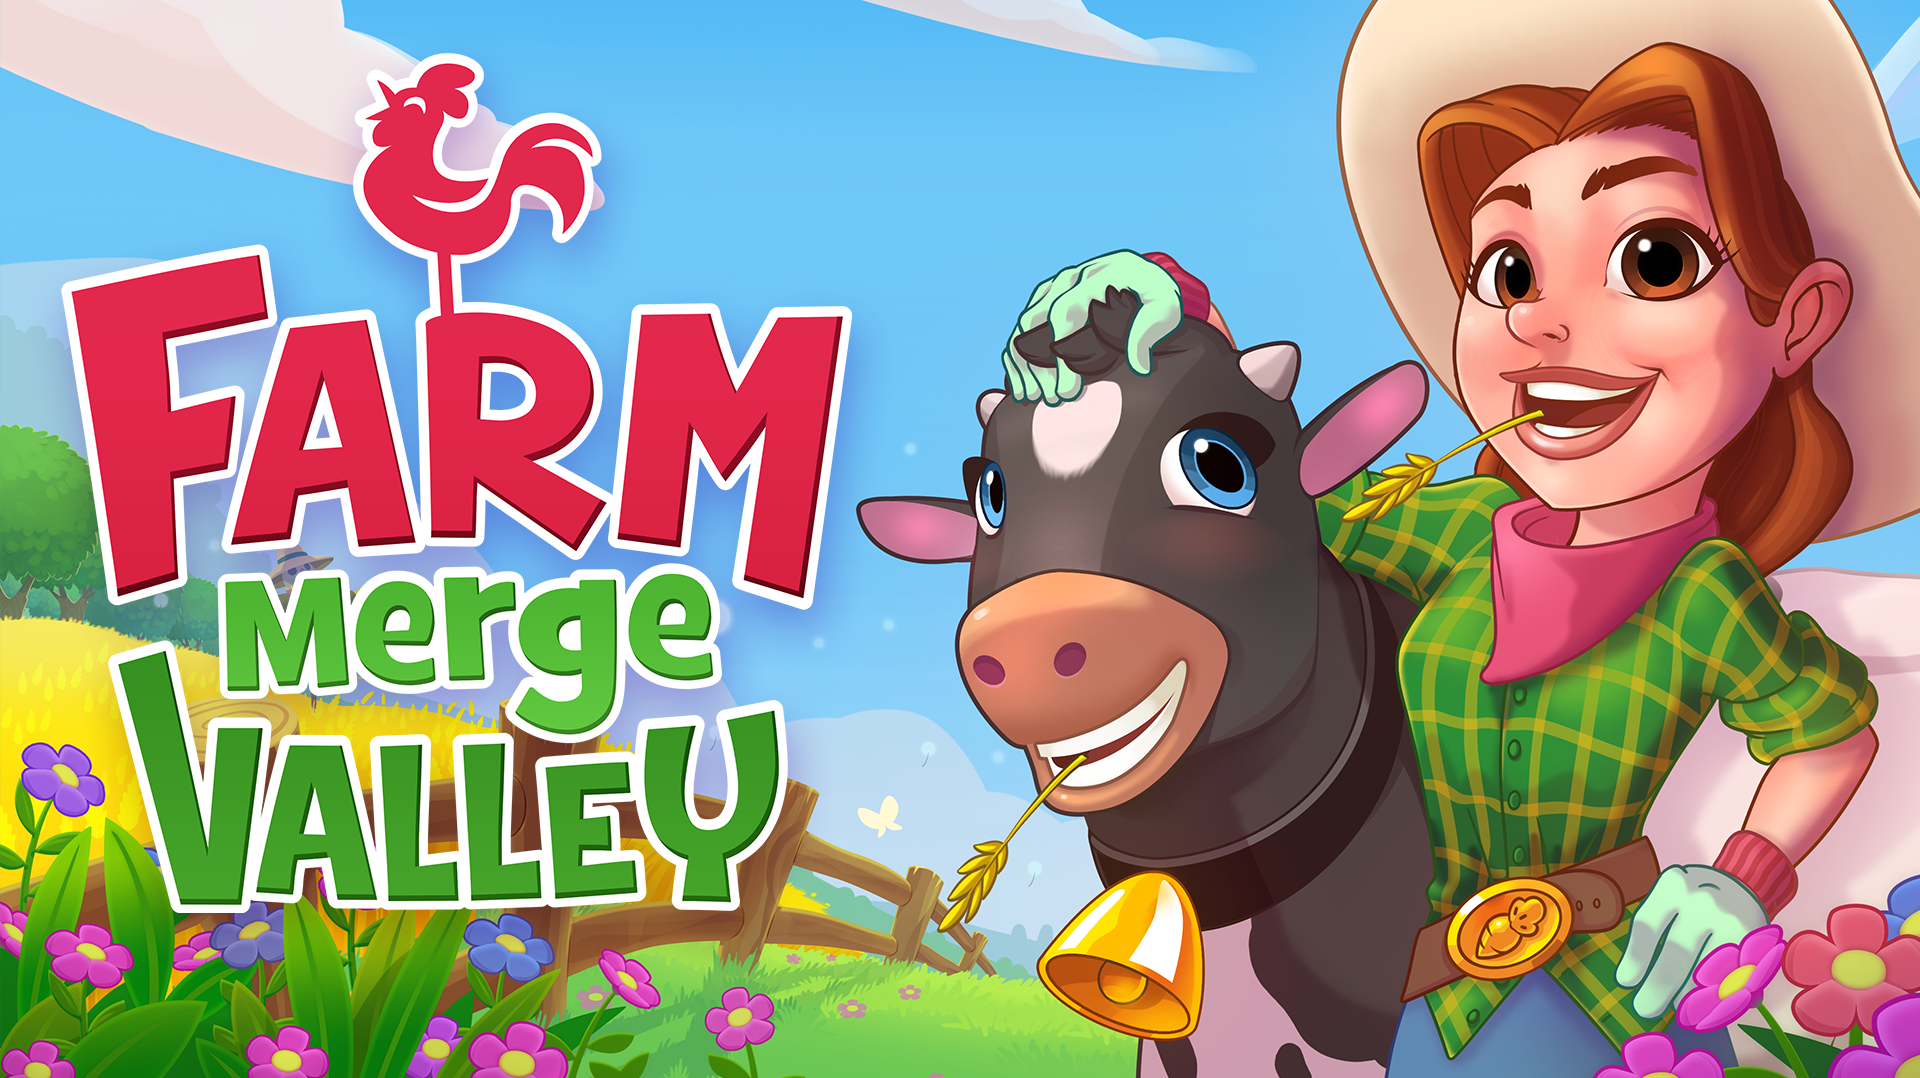 Farm Merge Valley Game Image